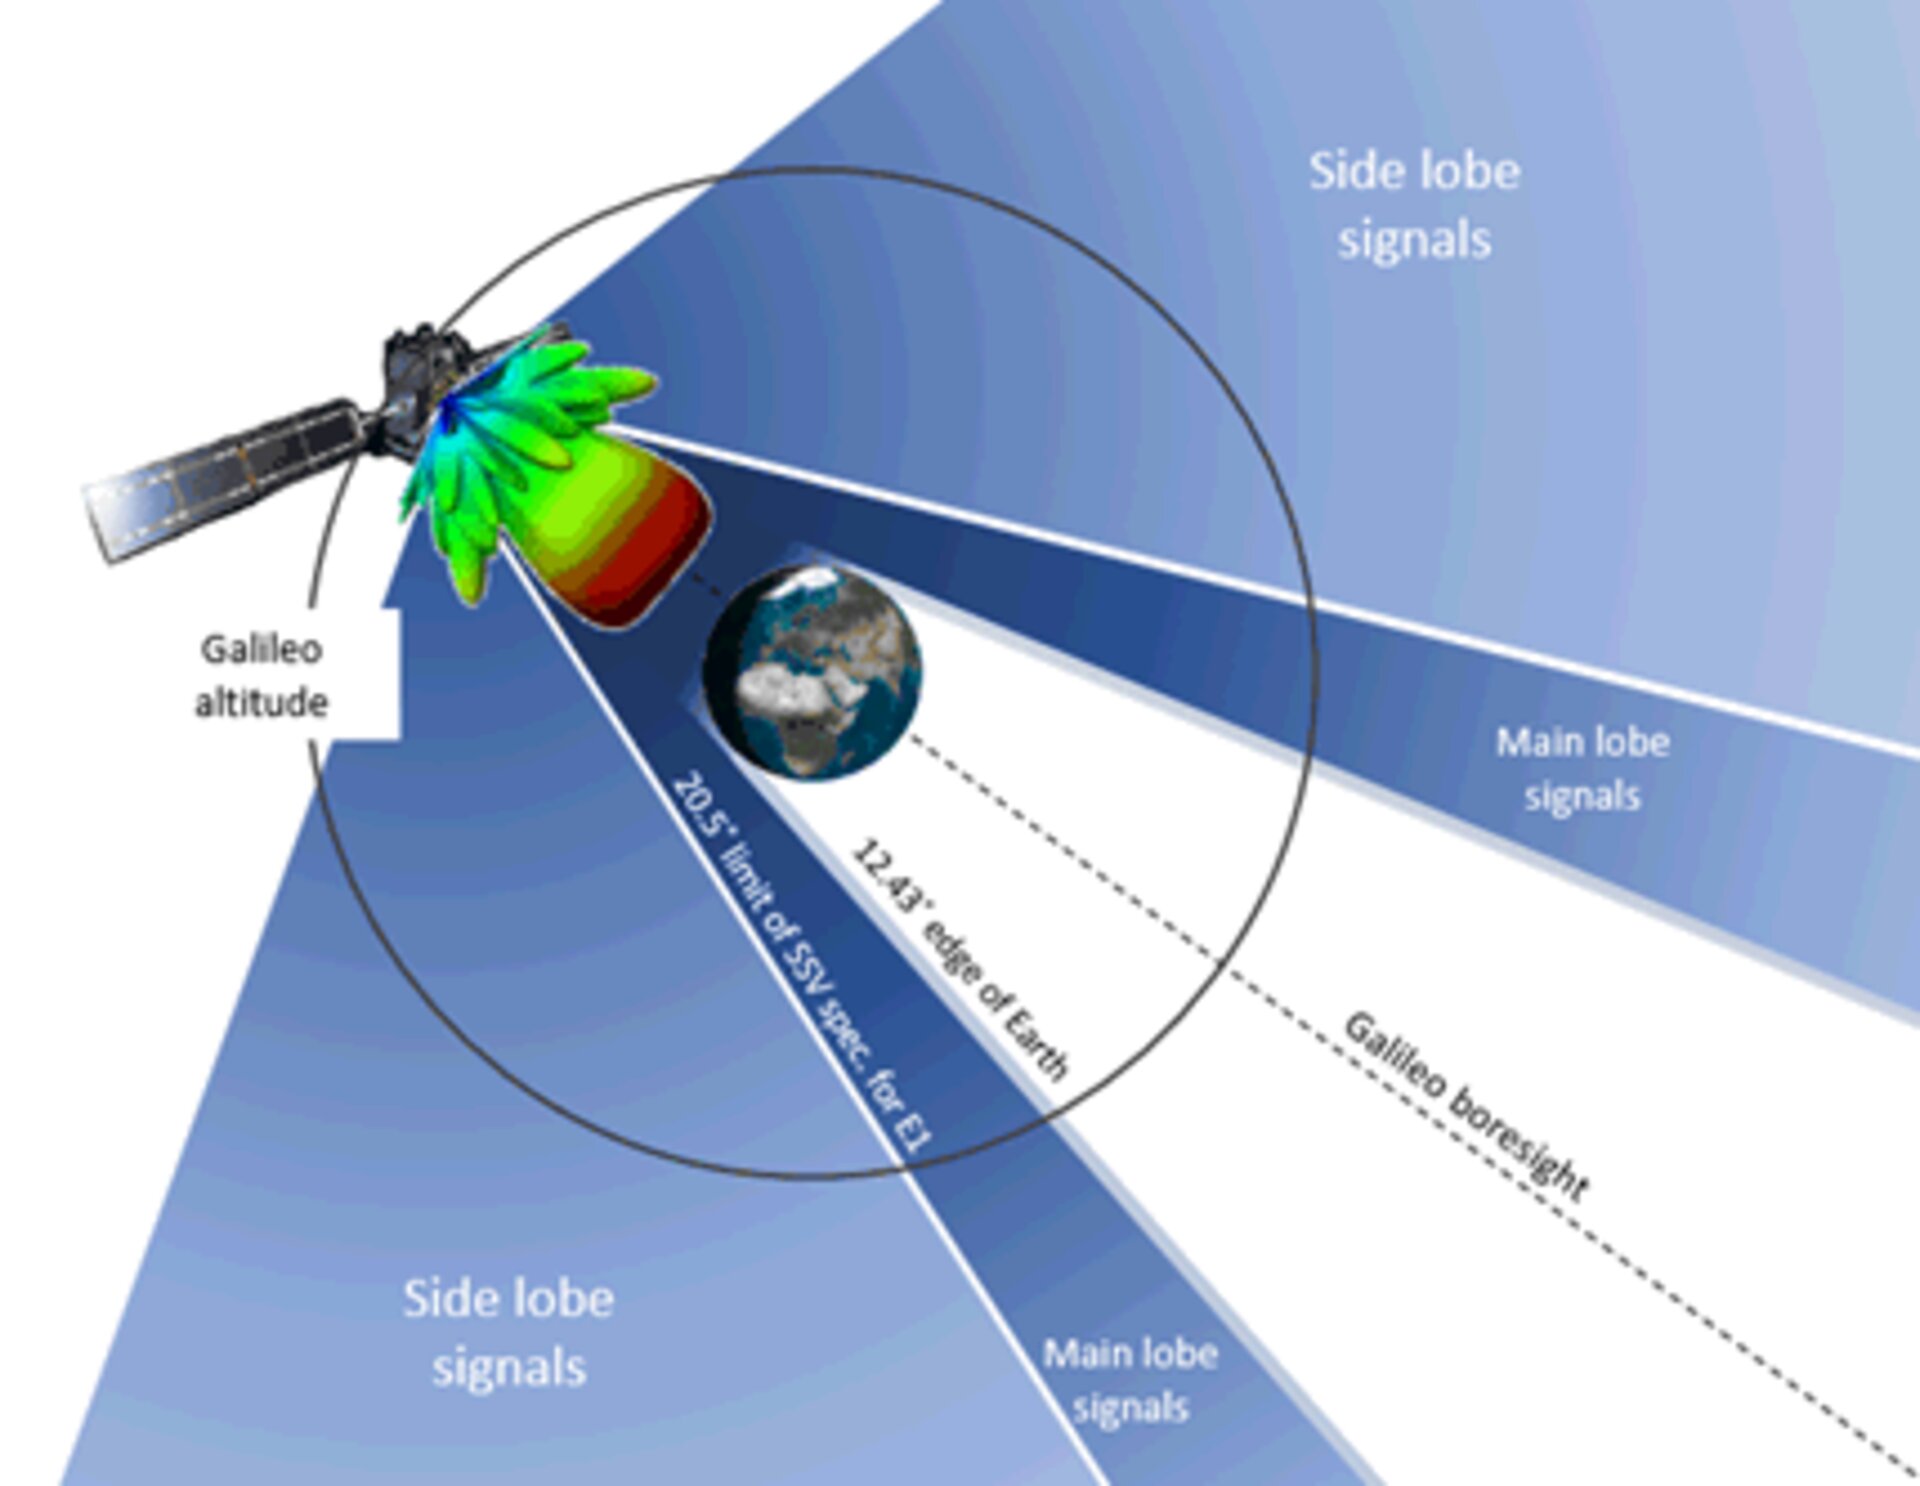 Galileo 'side lobe' signals